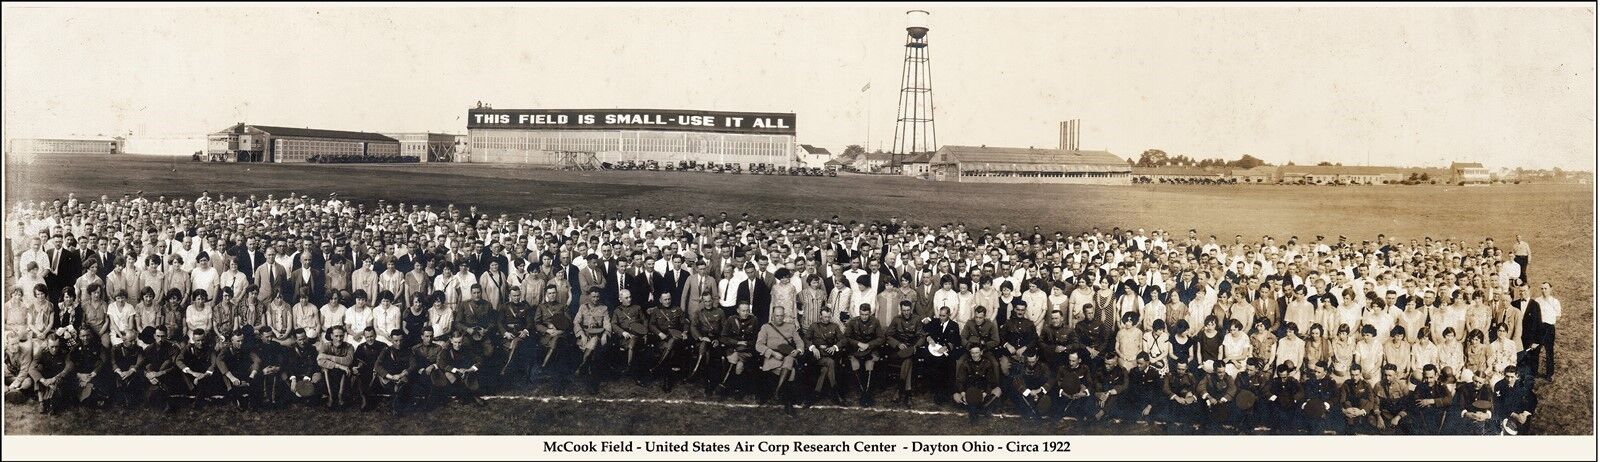 1925 MCCOOK FIELD U.S. ARMY AIR SERVICES TESTING DIV. DAYTON OHIO POSTER 8.5 X30